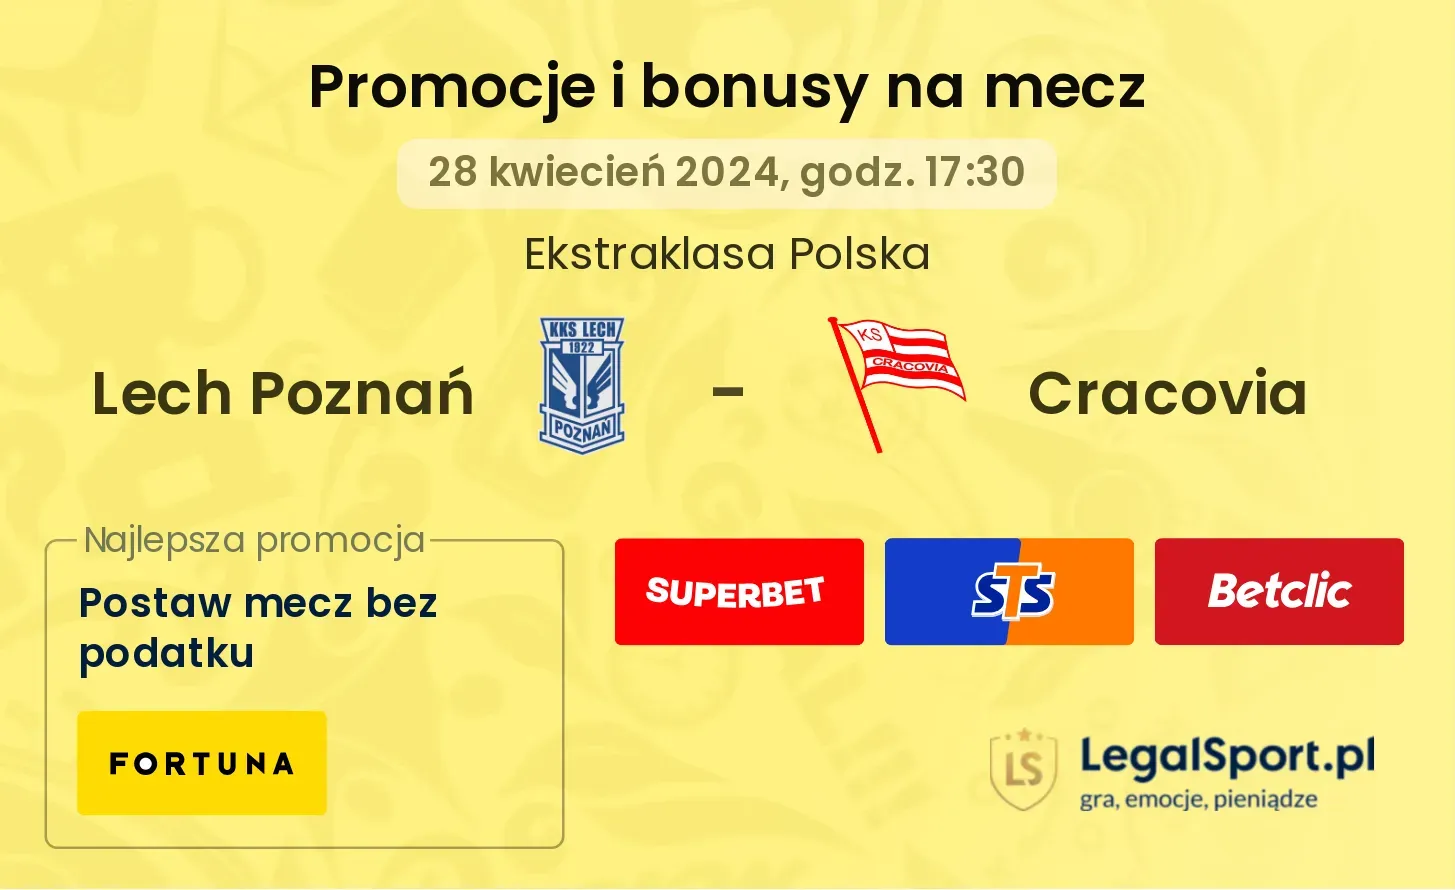 Lech Poznań - Cracovia promocje bonusy na mecz